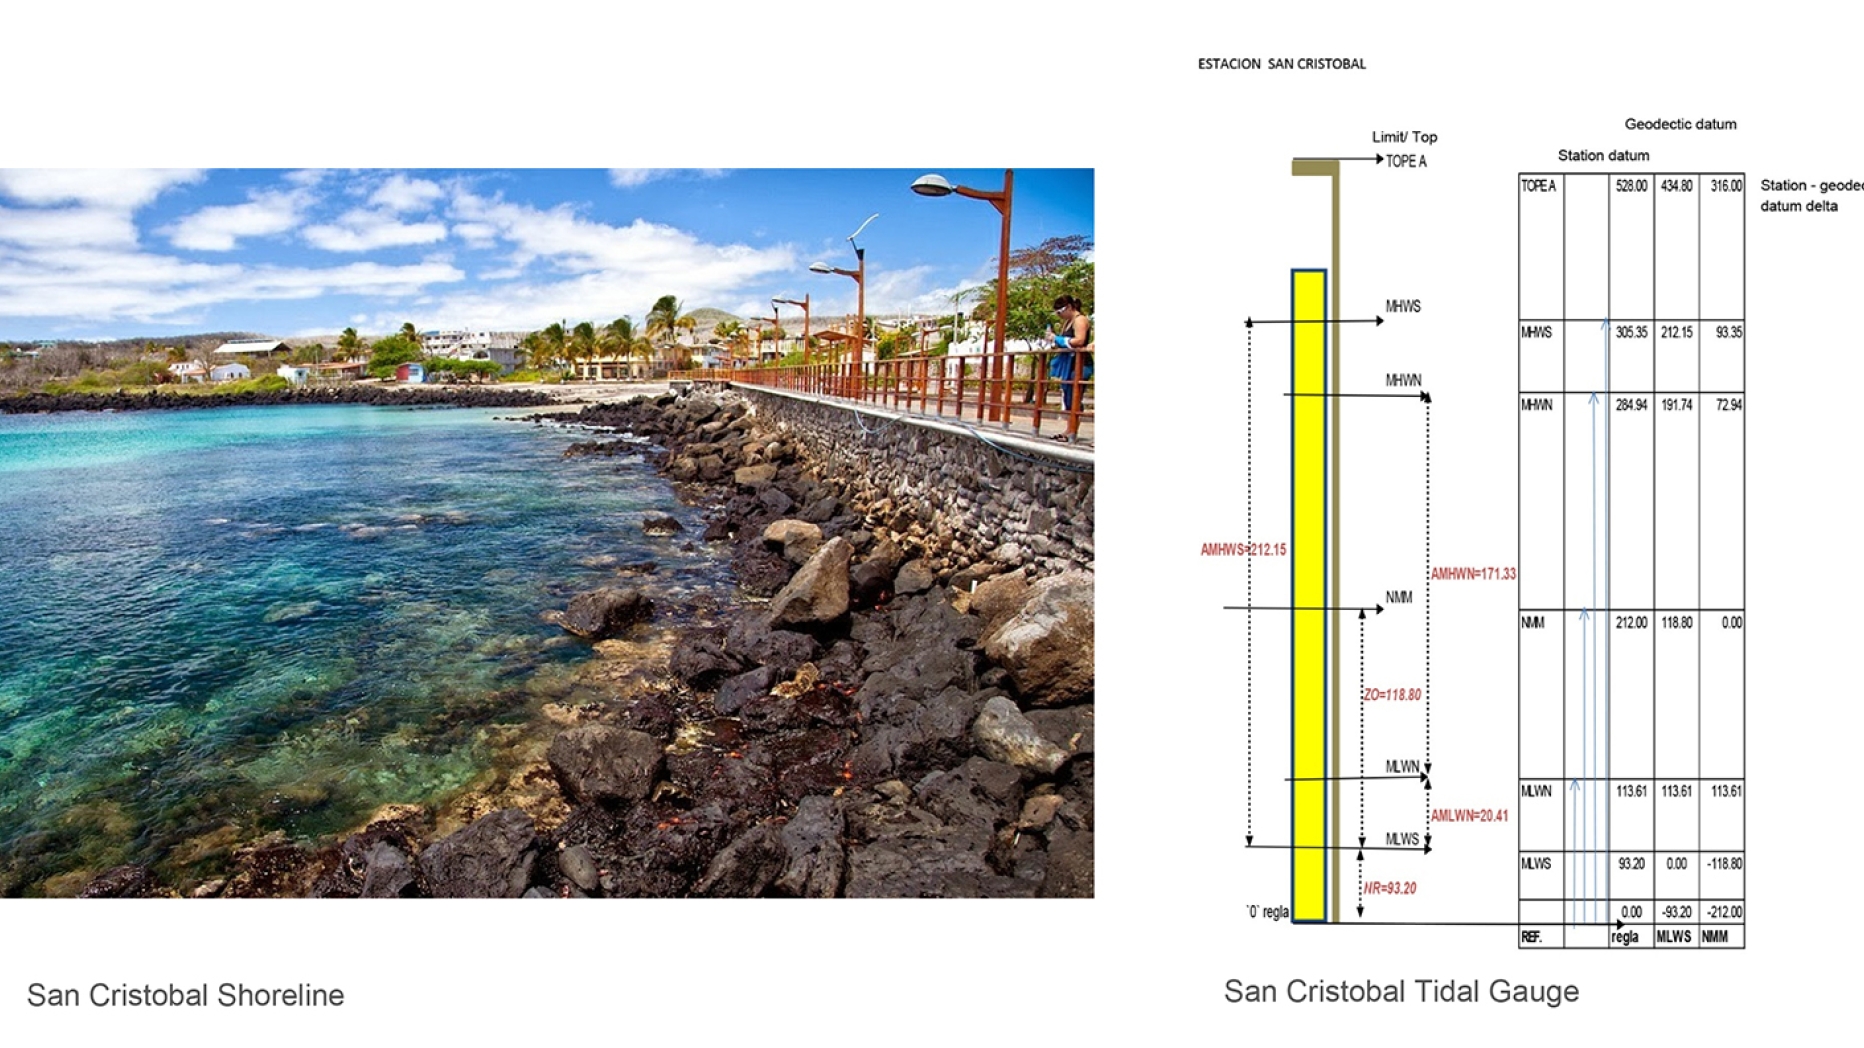 Combination image. Left: Photograph of boardwalk along San Cristobal Coast. Right: Graph of San Cristobal tidal gauge 